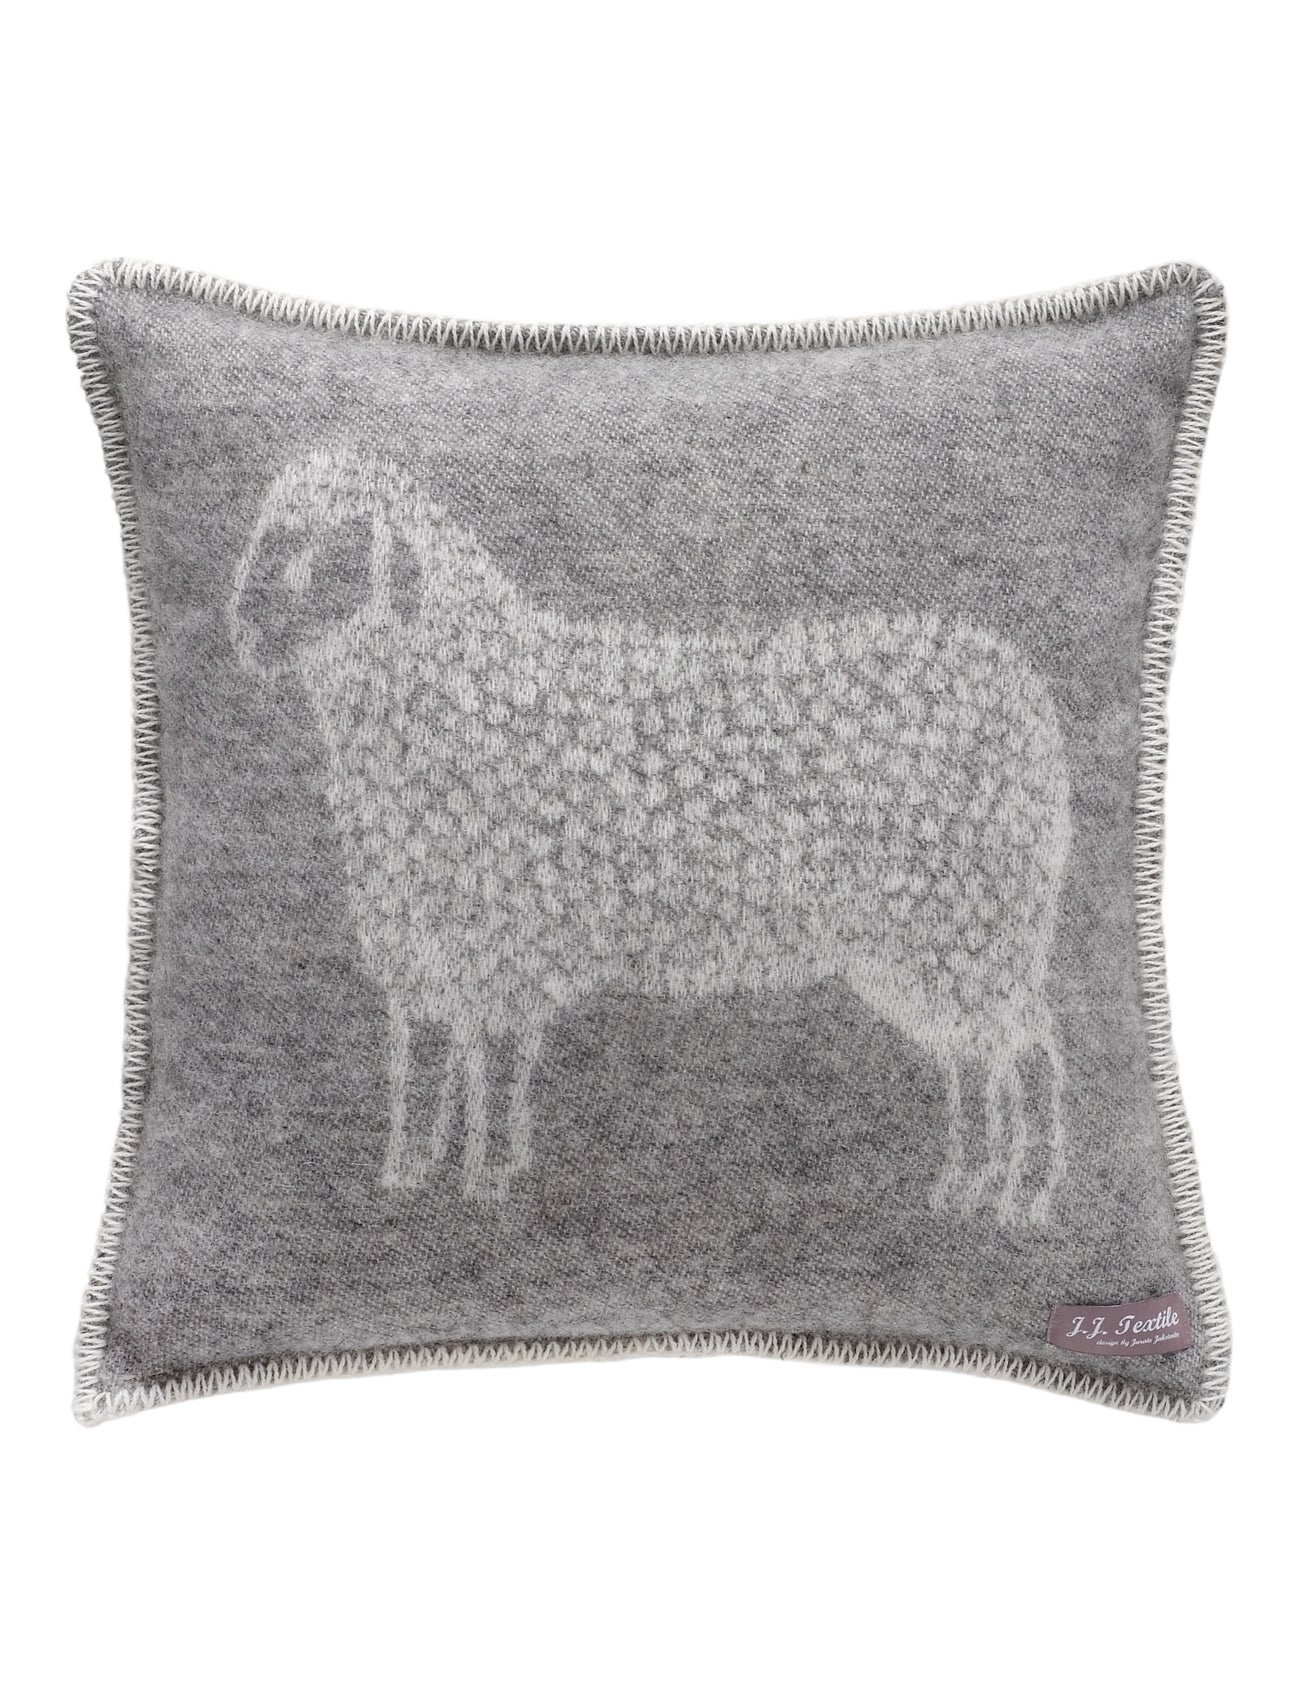 Sheep Cushion Cover By J.J. Textie